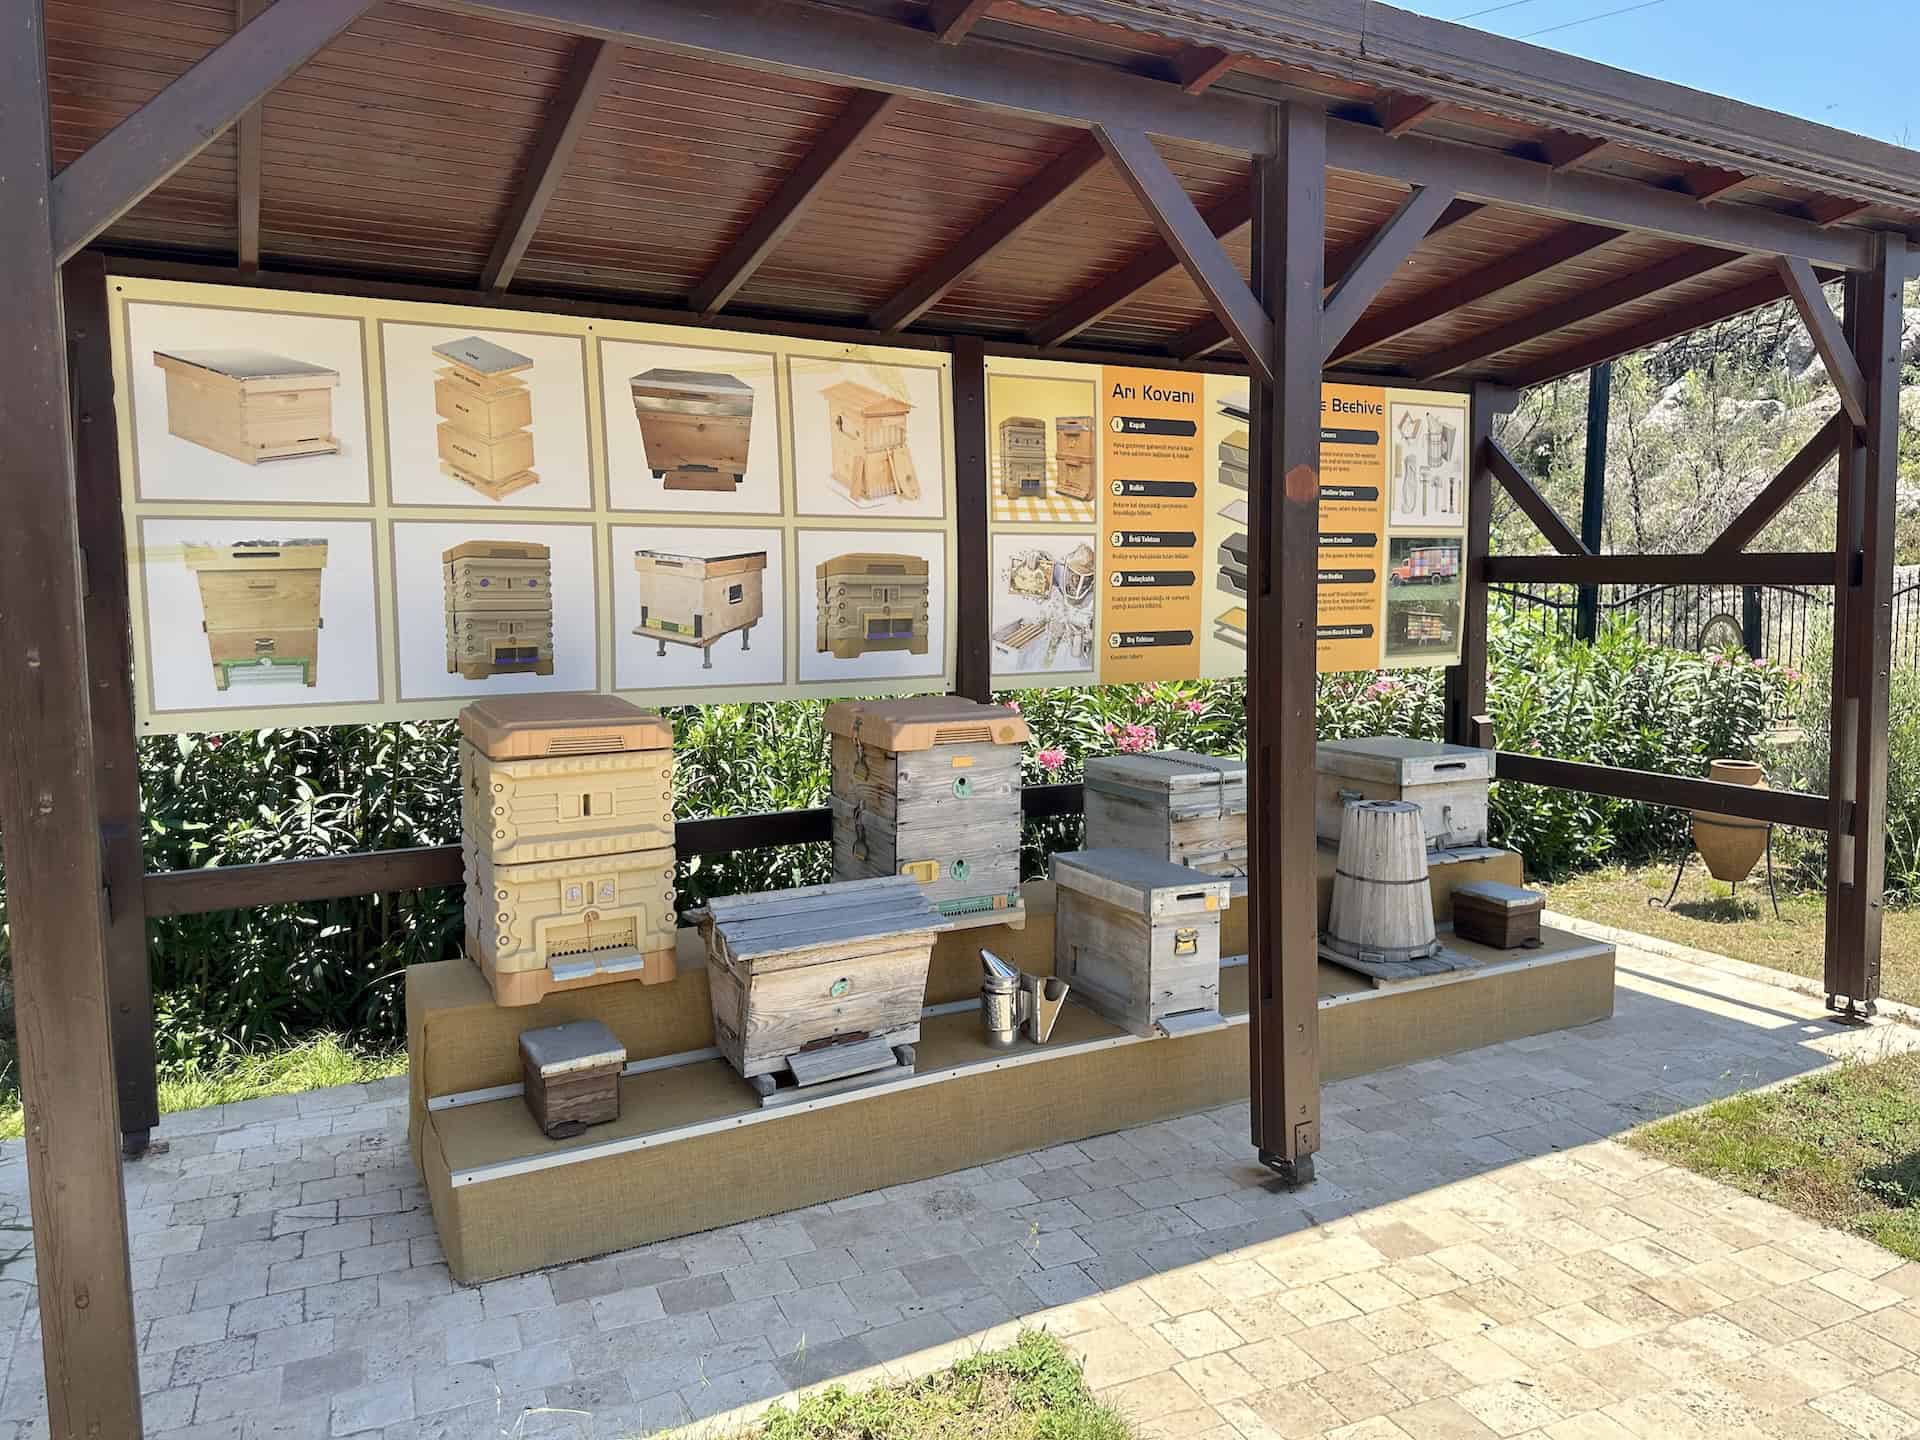 Modern beehives from different regions of Turkey at the Marmaris Honey House on the Bozburun Peninsula, Turkey